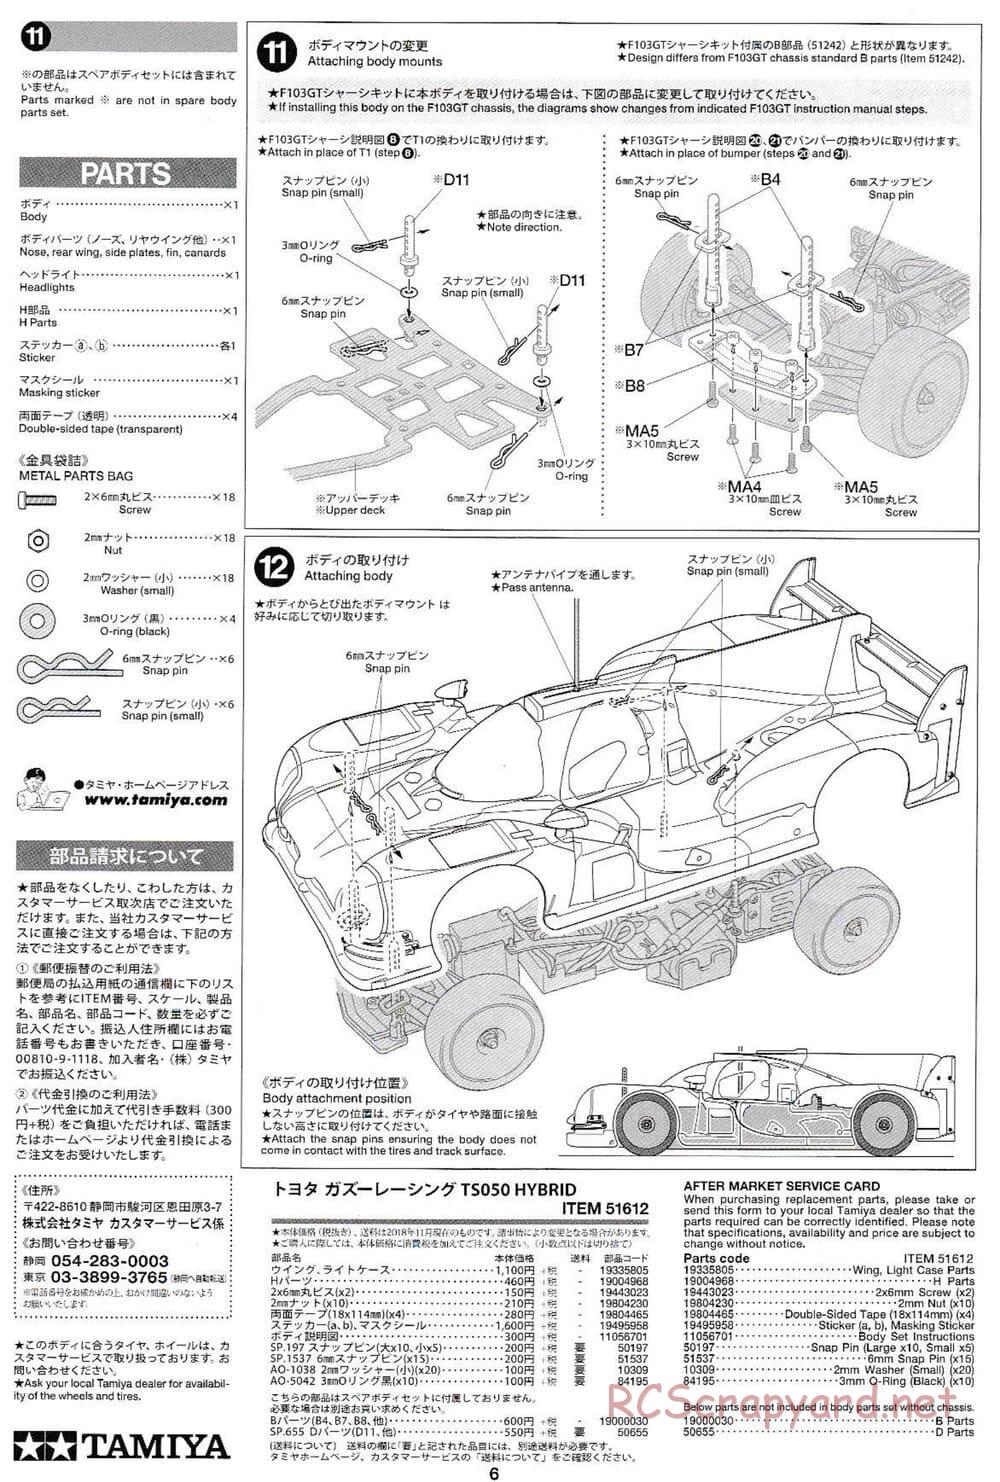 Tamiya - Toyota Gazoo Racing TS050 HYBRID - F103GT Chassis - Body Manual - Page 6